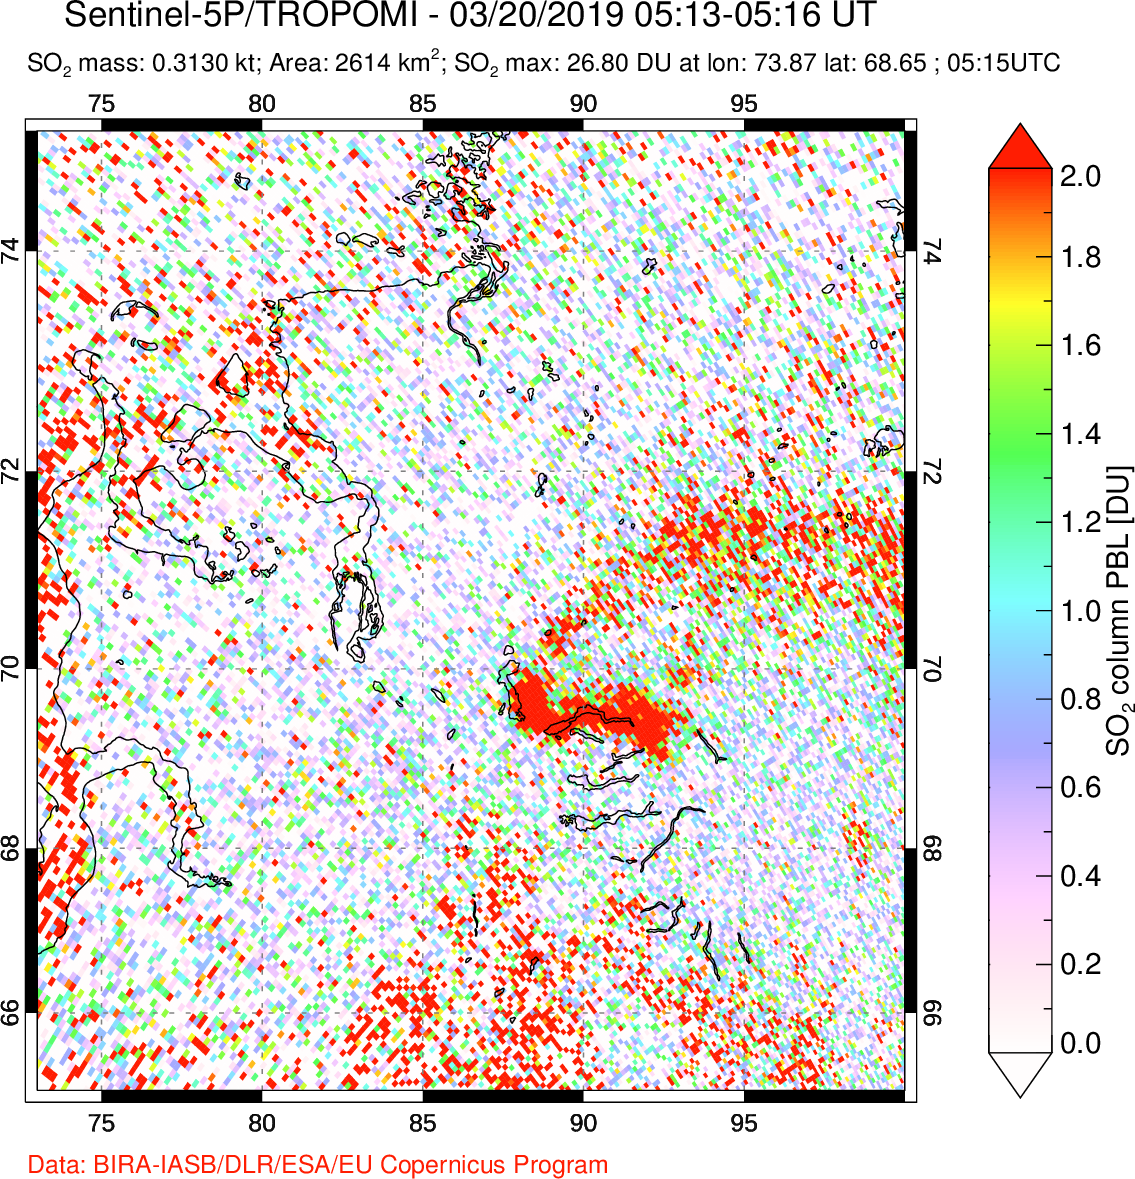 A sulfur dioxide image over Norilsk, Russian Federation on Mar 20, 2019.